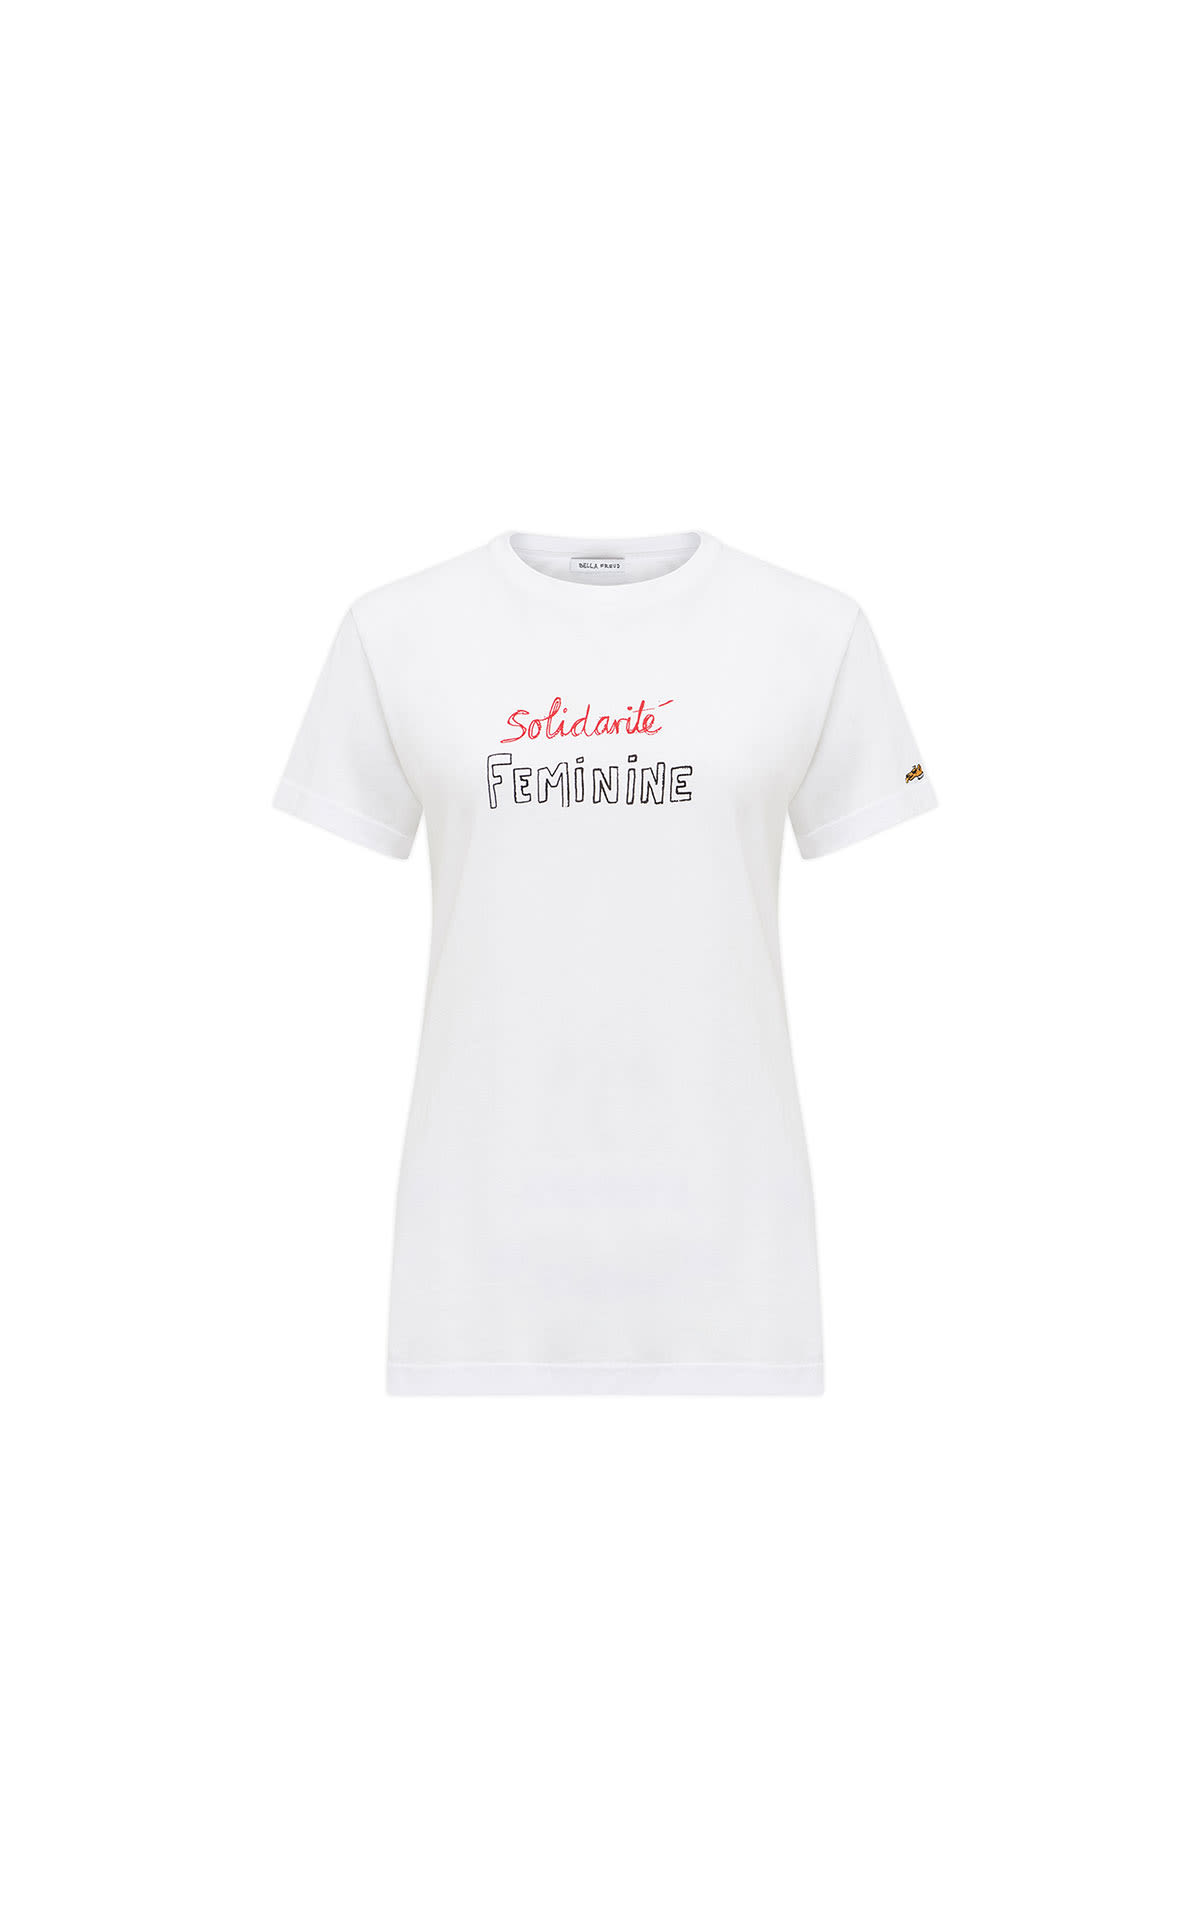 Bella Freud Solidarite feminine t-shirt white from Bicester Village